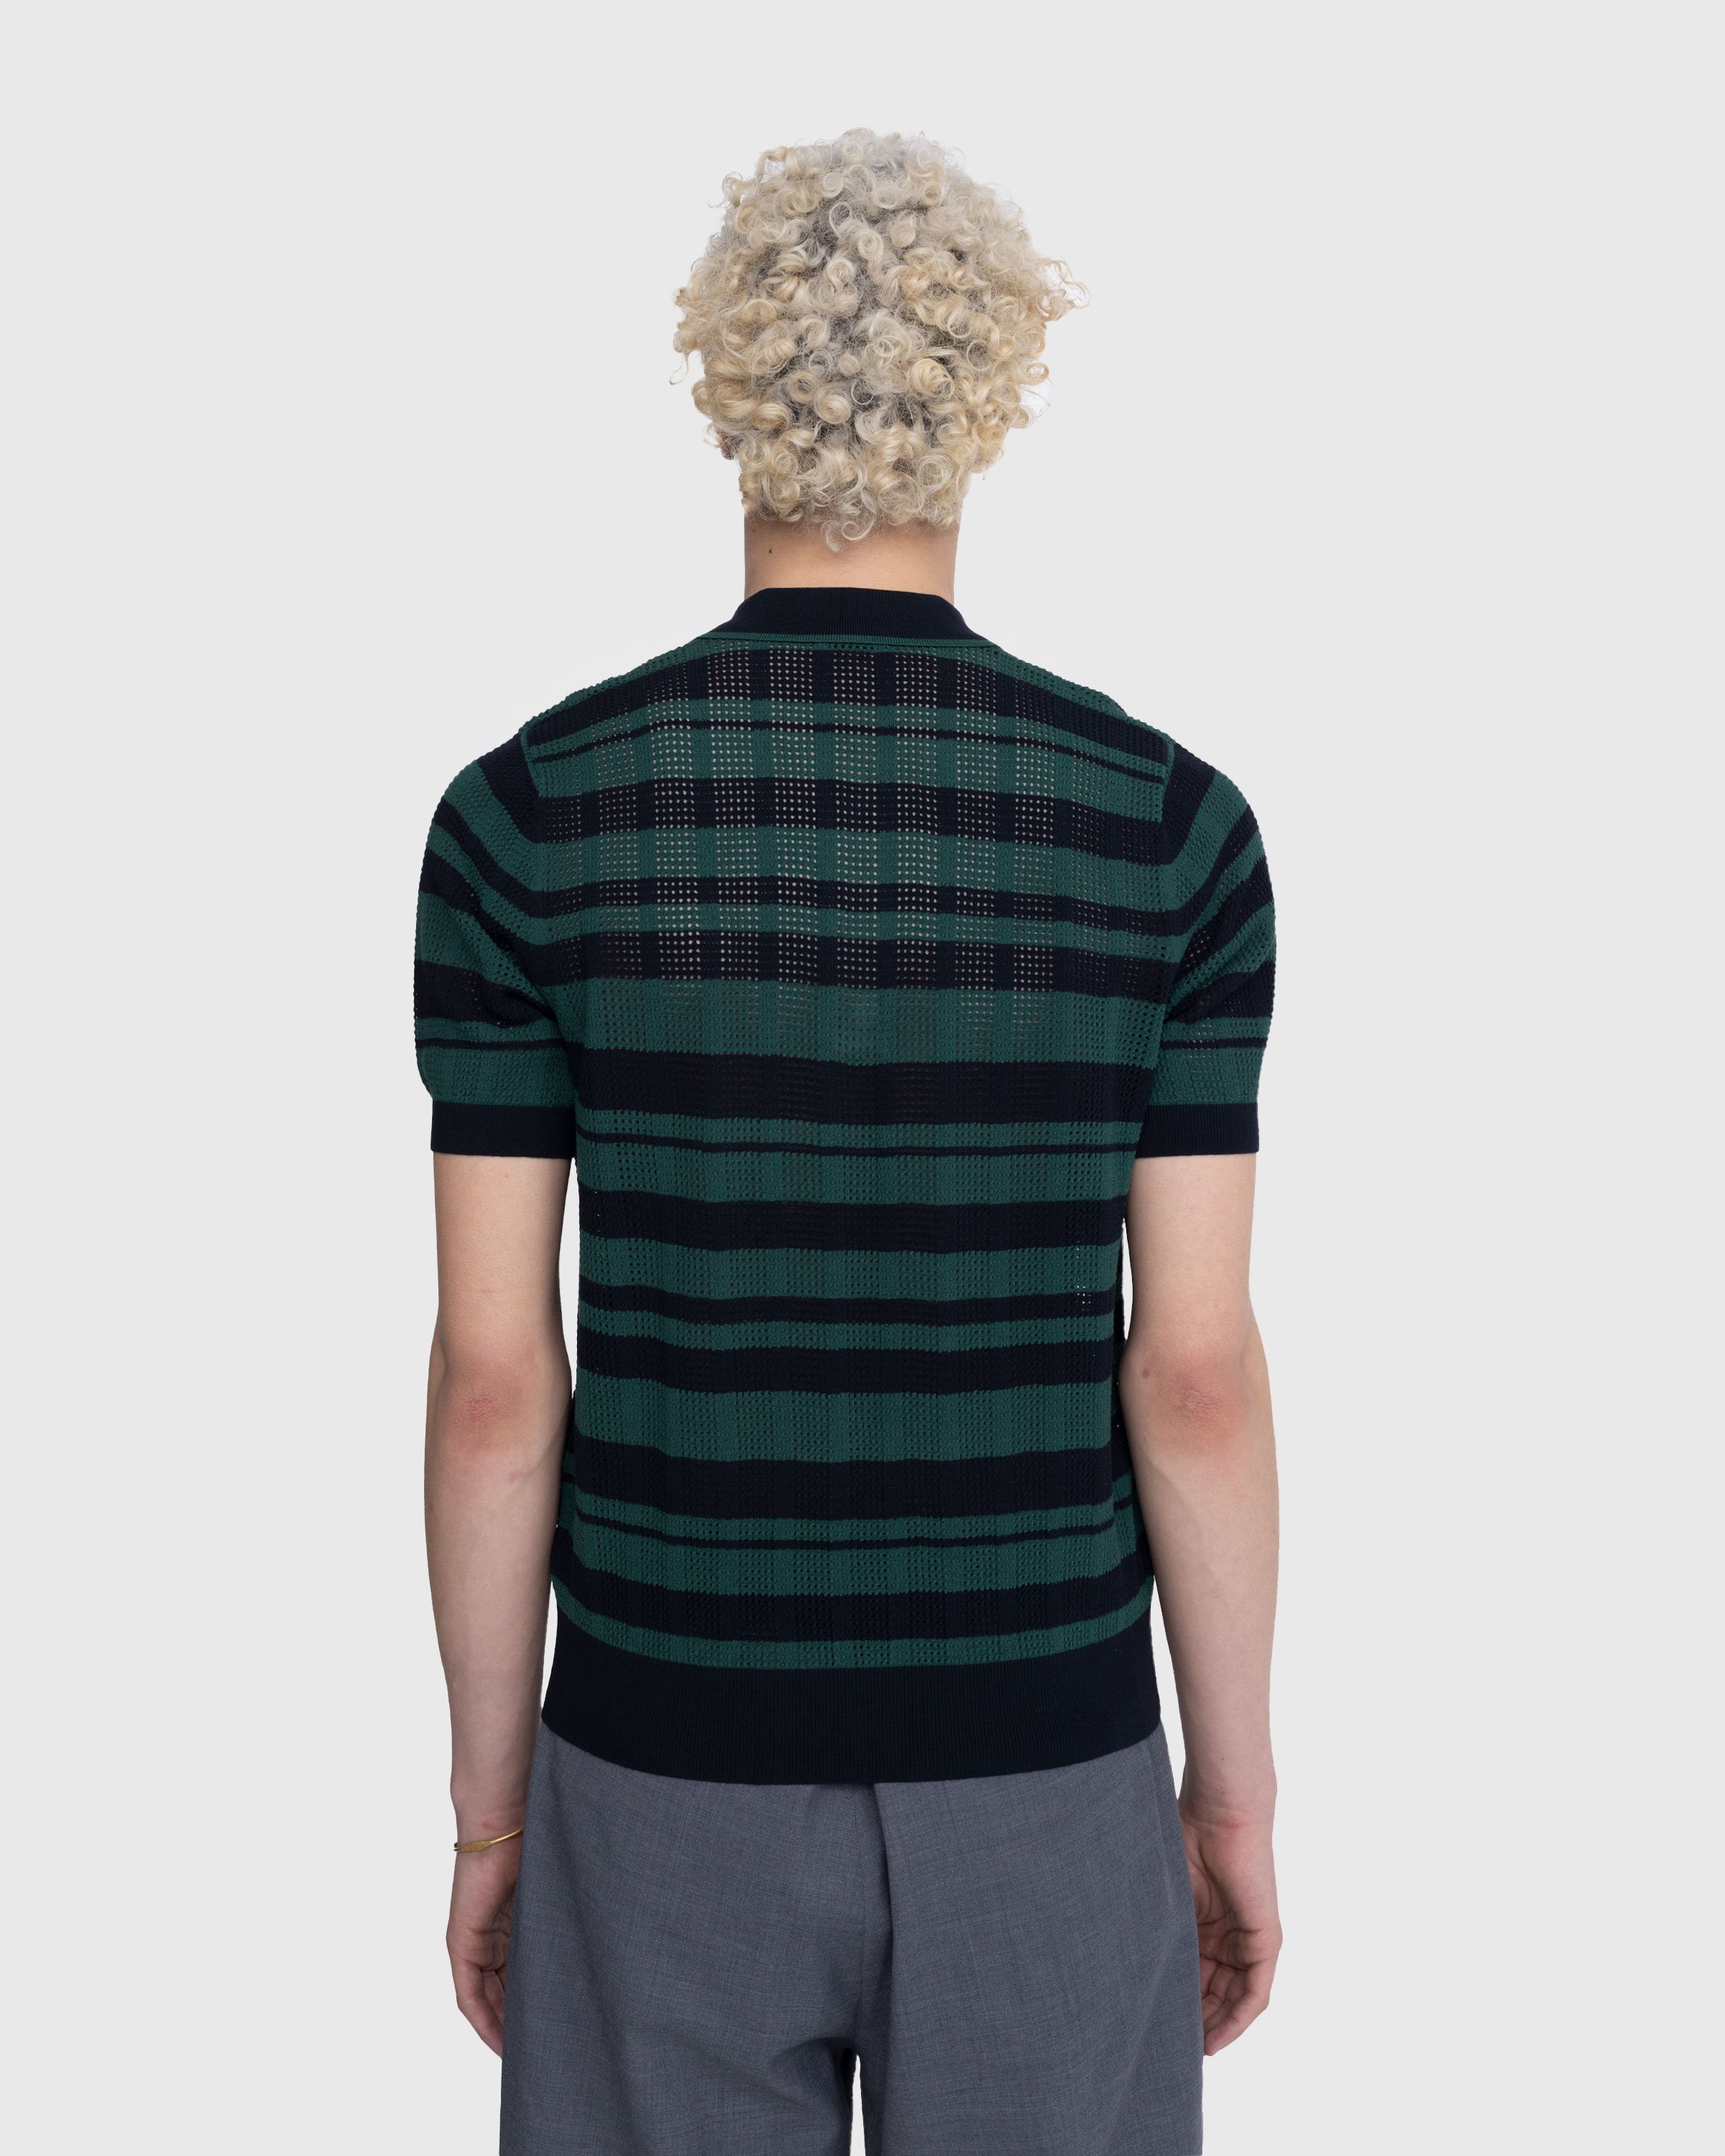 Dries van Noten - Mirko Striped Polo Shirt Black - Clothing - Black - Image 3